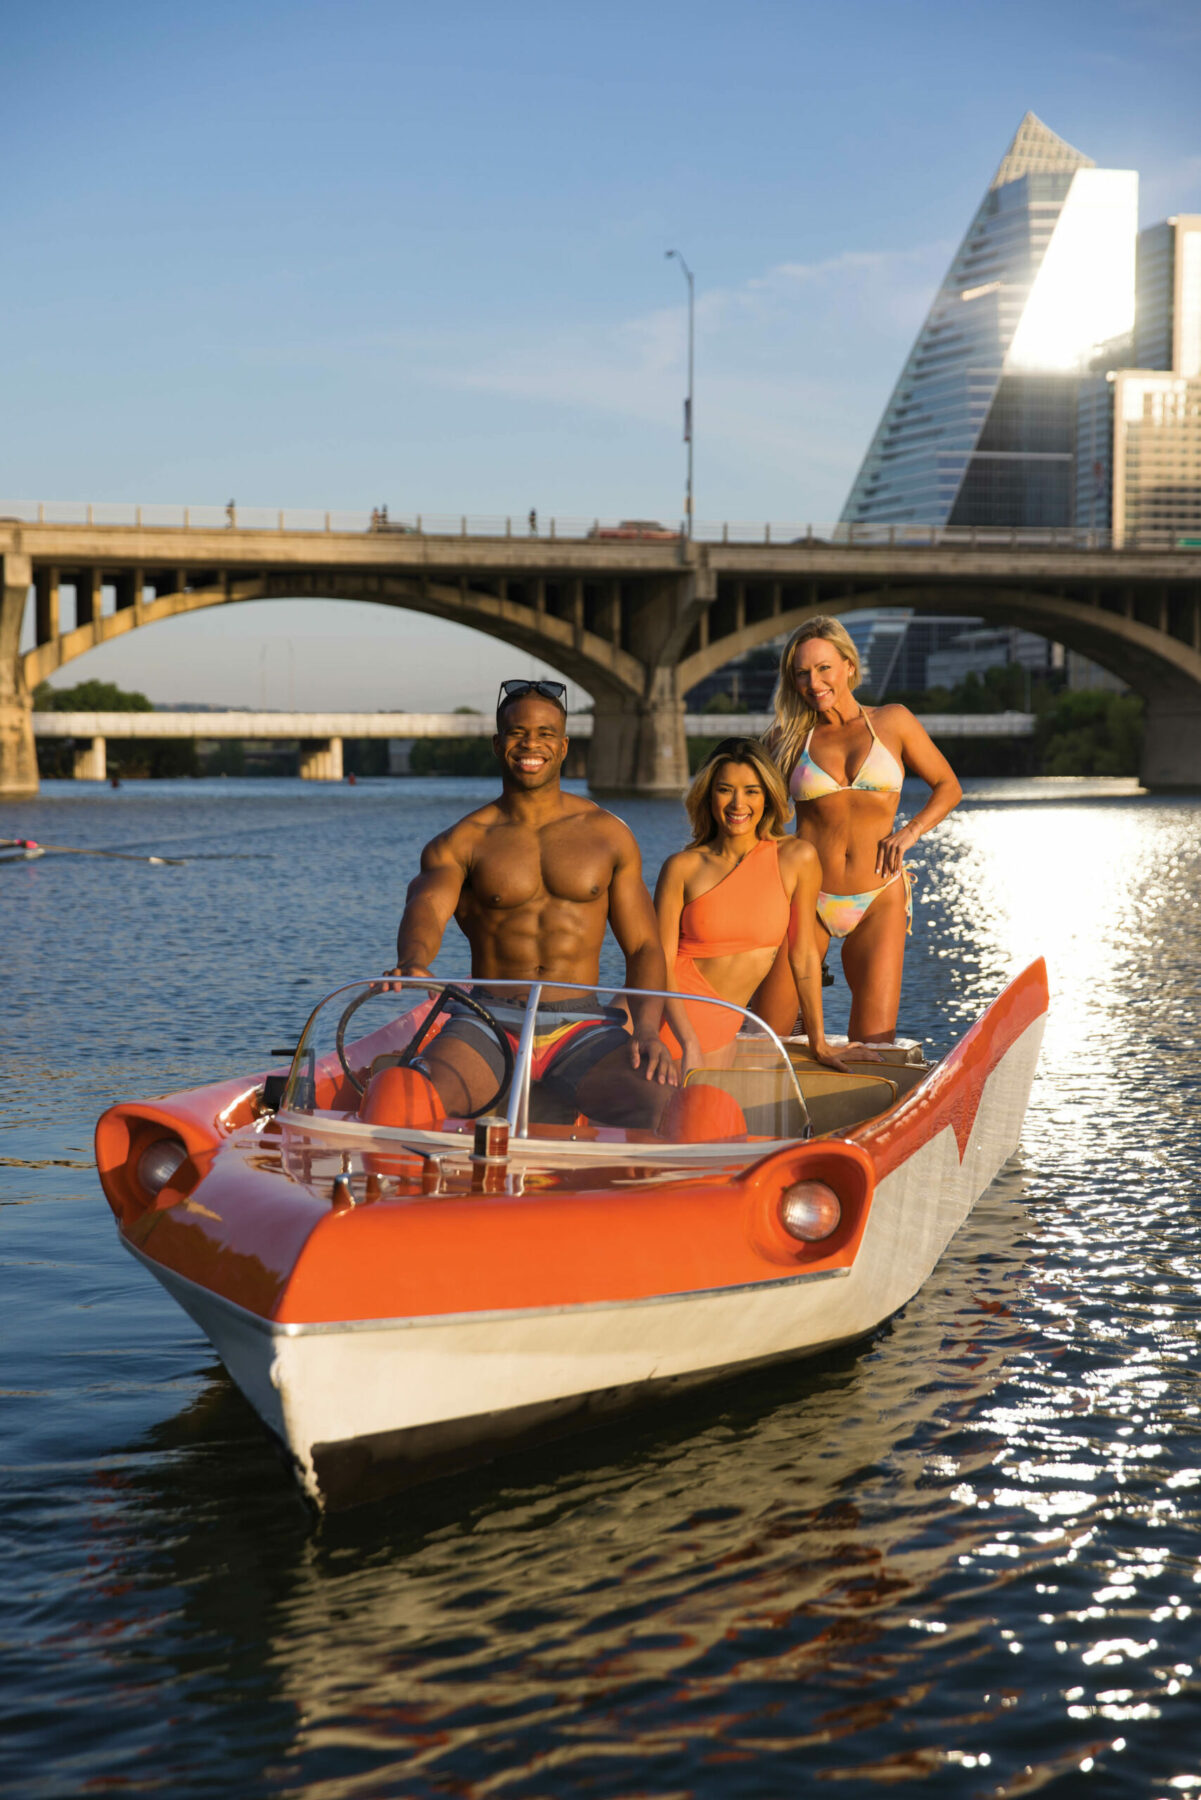 Swimsuit models on boat.